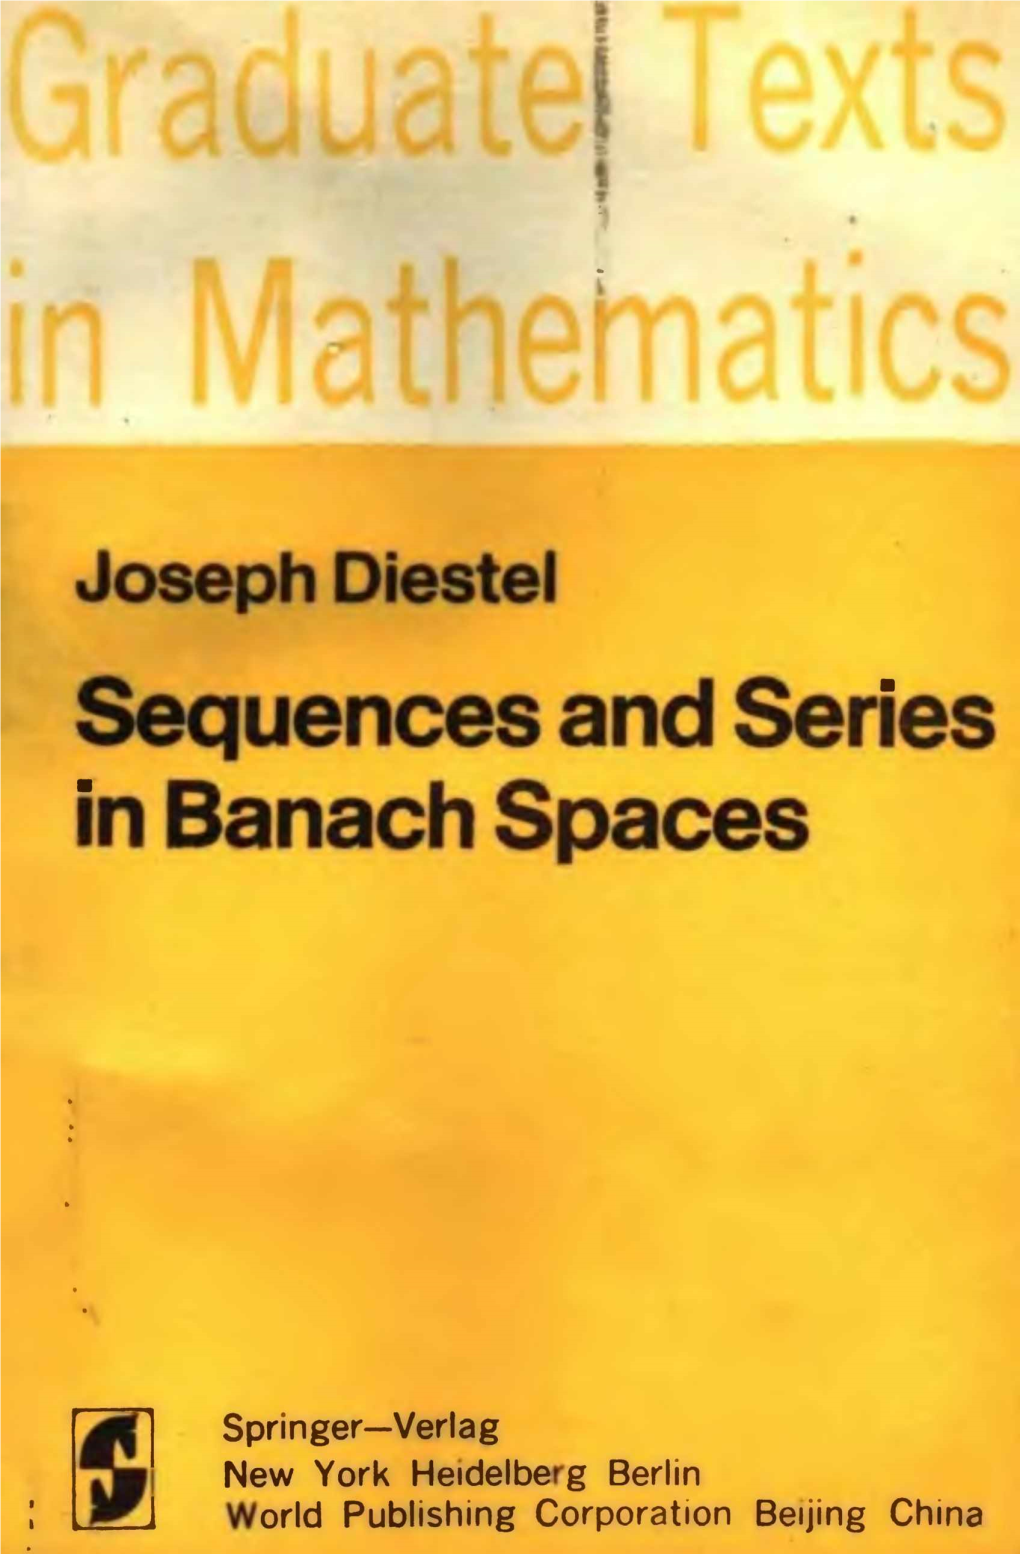 Rauutei Vtc T Inmatherrdics Joseph Diestel Sequences and Series in Banach Spaces